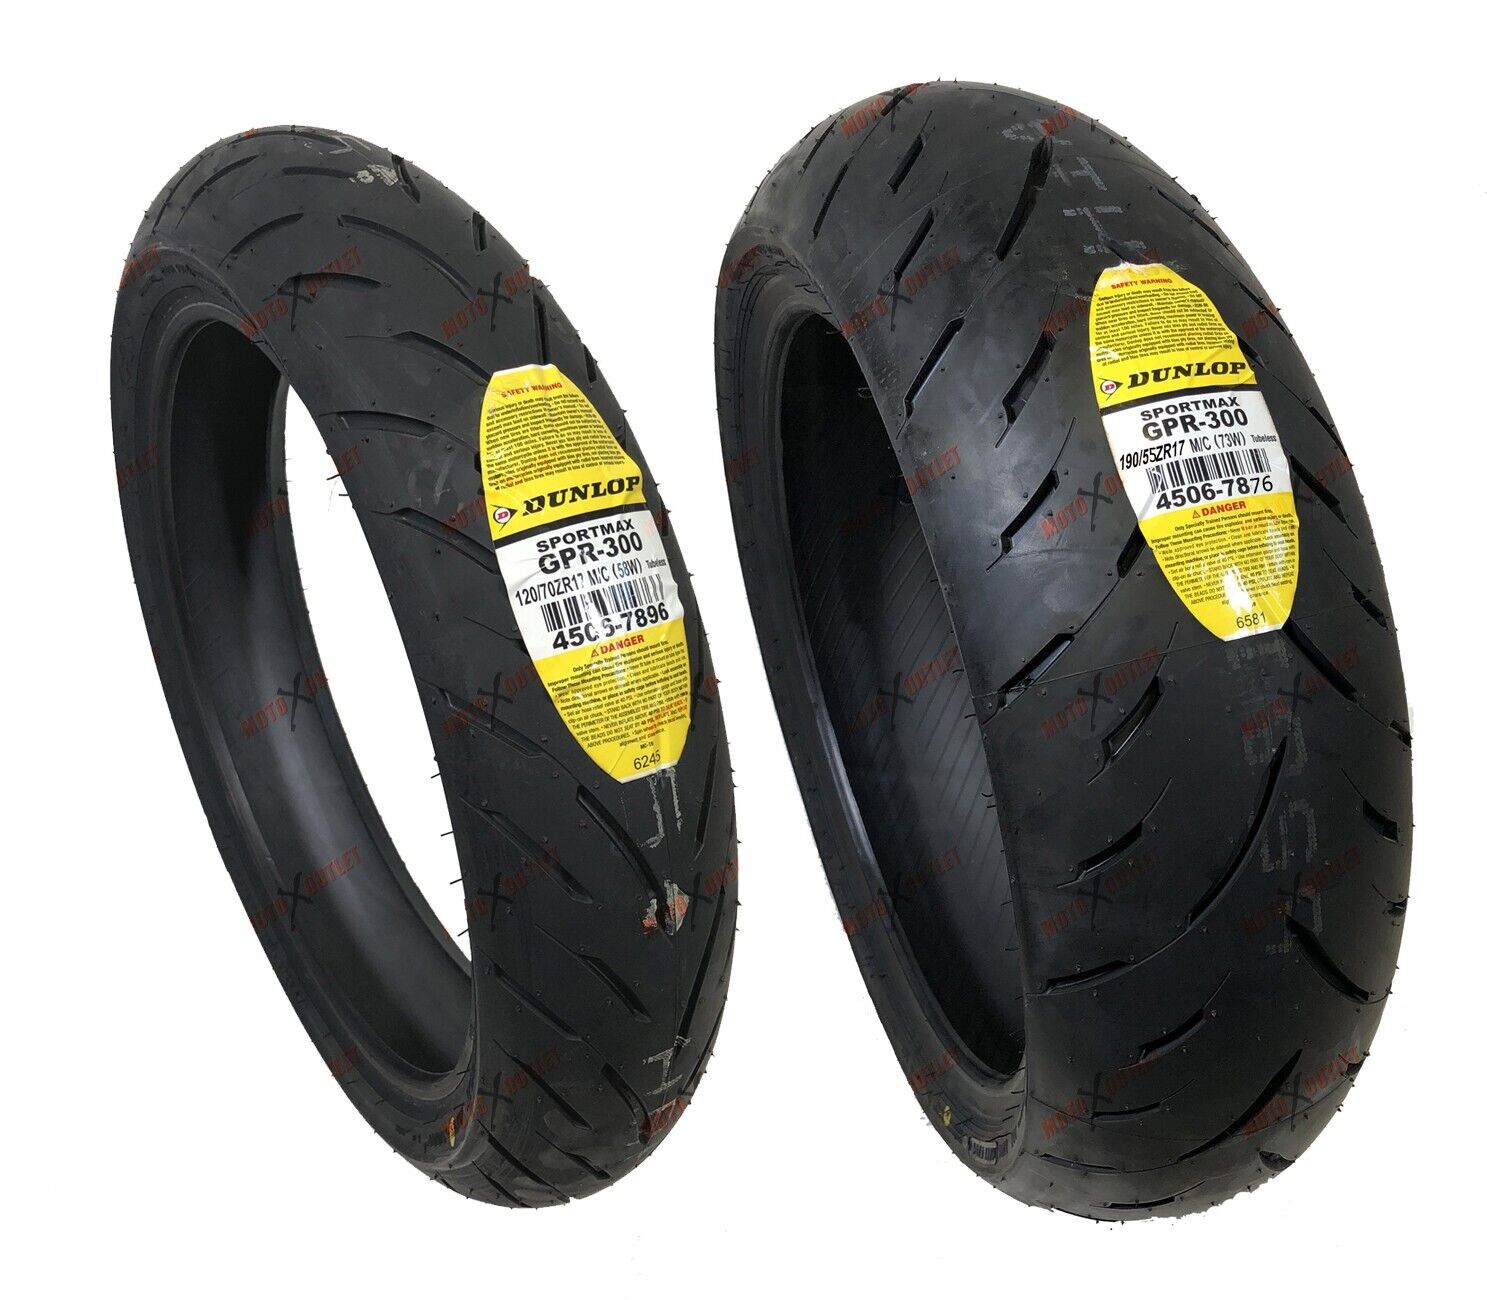 Dunlop Sportmax 190/55ZR17 120/70ZR17 Front Rear Motorcycle Tires GPR 300